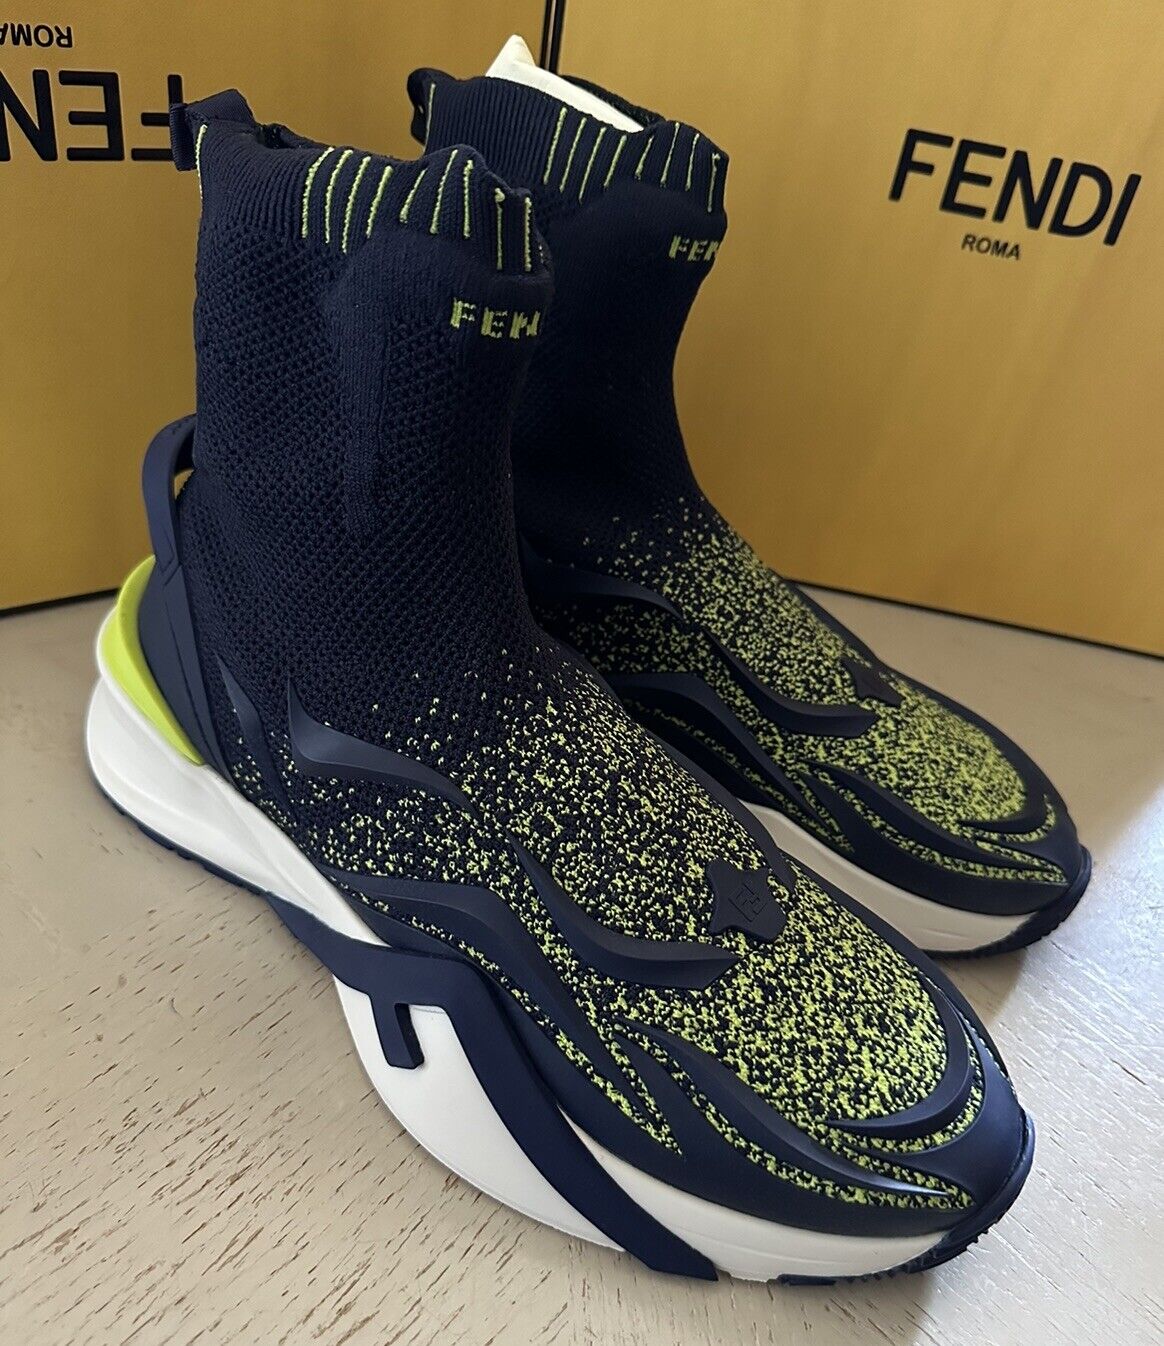 NIB $ 1190 Fendi Contrast Knit High Top Sneakers Schuhe Marine/Grün 11 US/10 UK